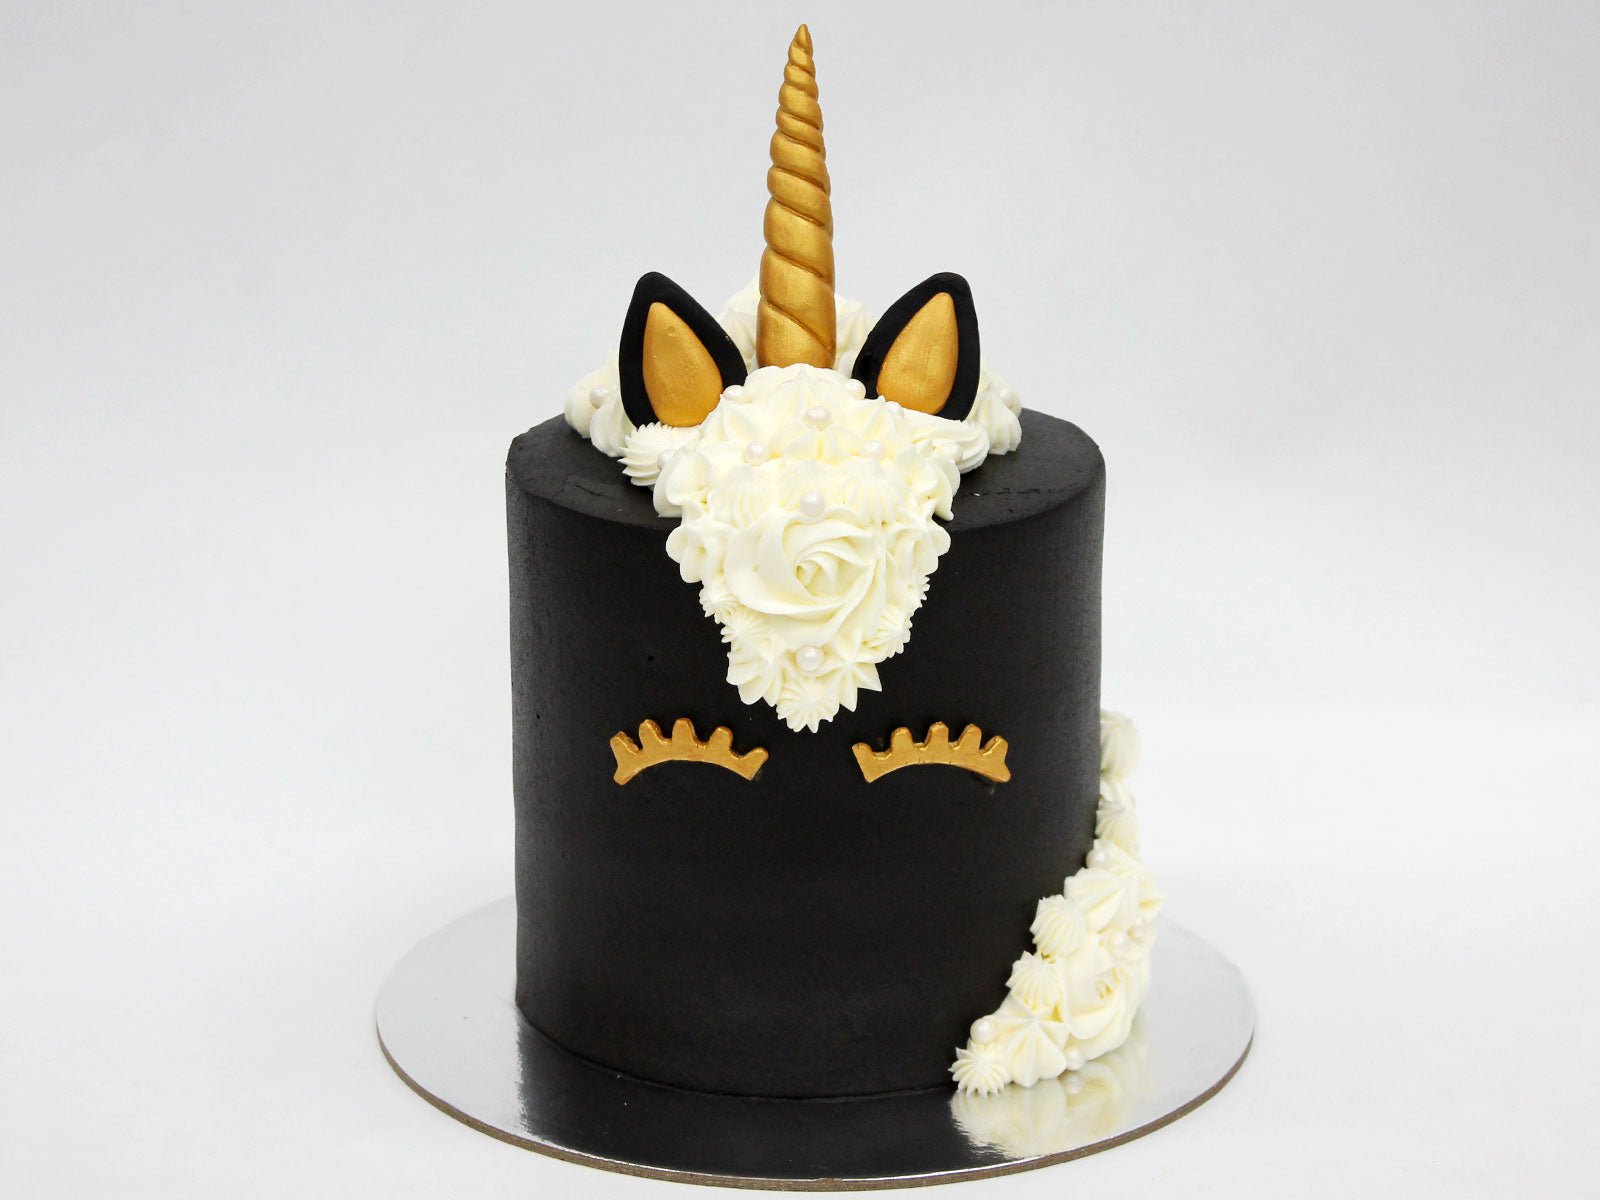 Details 83+ unicorn cake fail nailed it - in.daotaonec